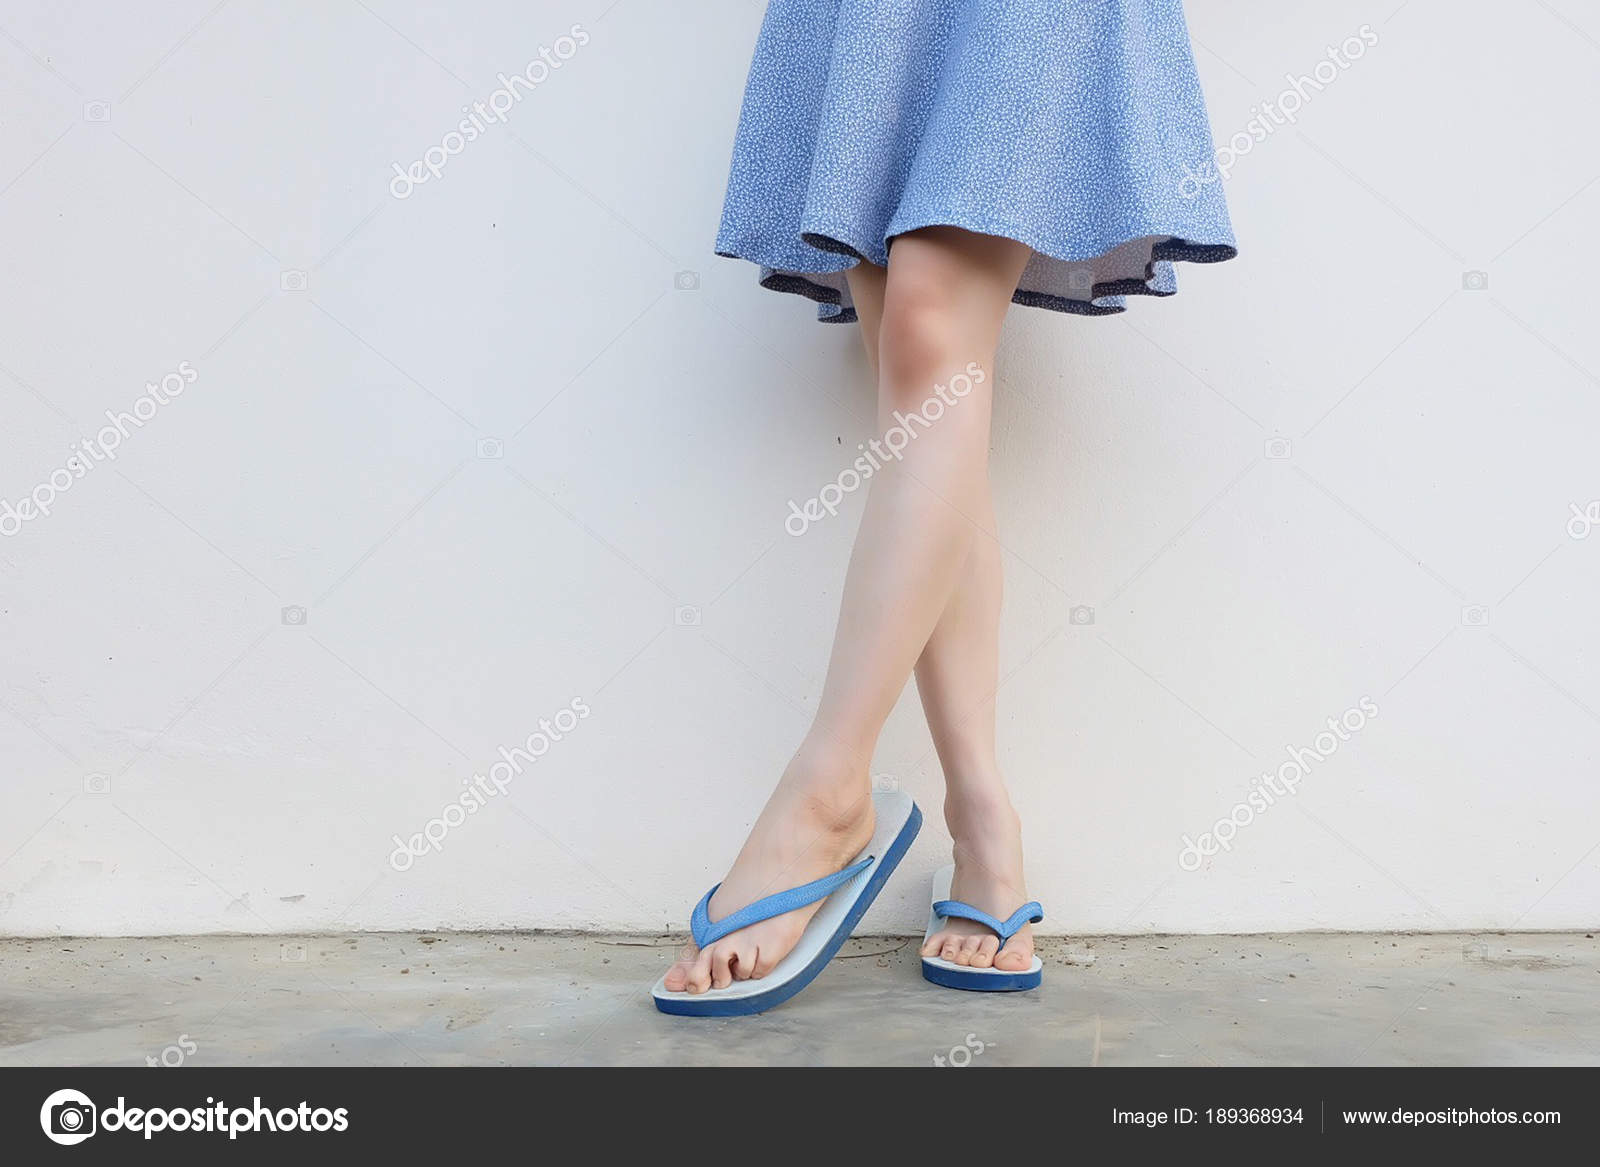 https://st3.depositphotos.com/3978719/18936/i/1600/depositphotos_189368934-stock-photo-selfie-girl-slim-legs-blue.jpg